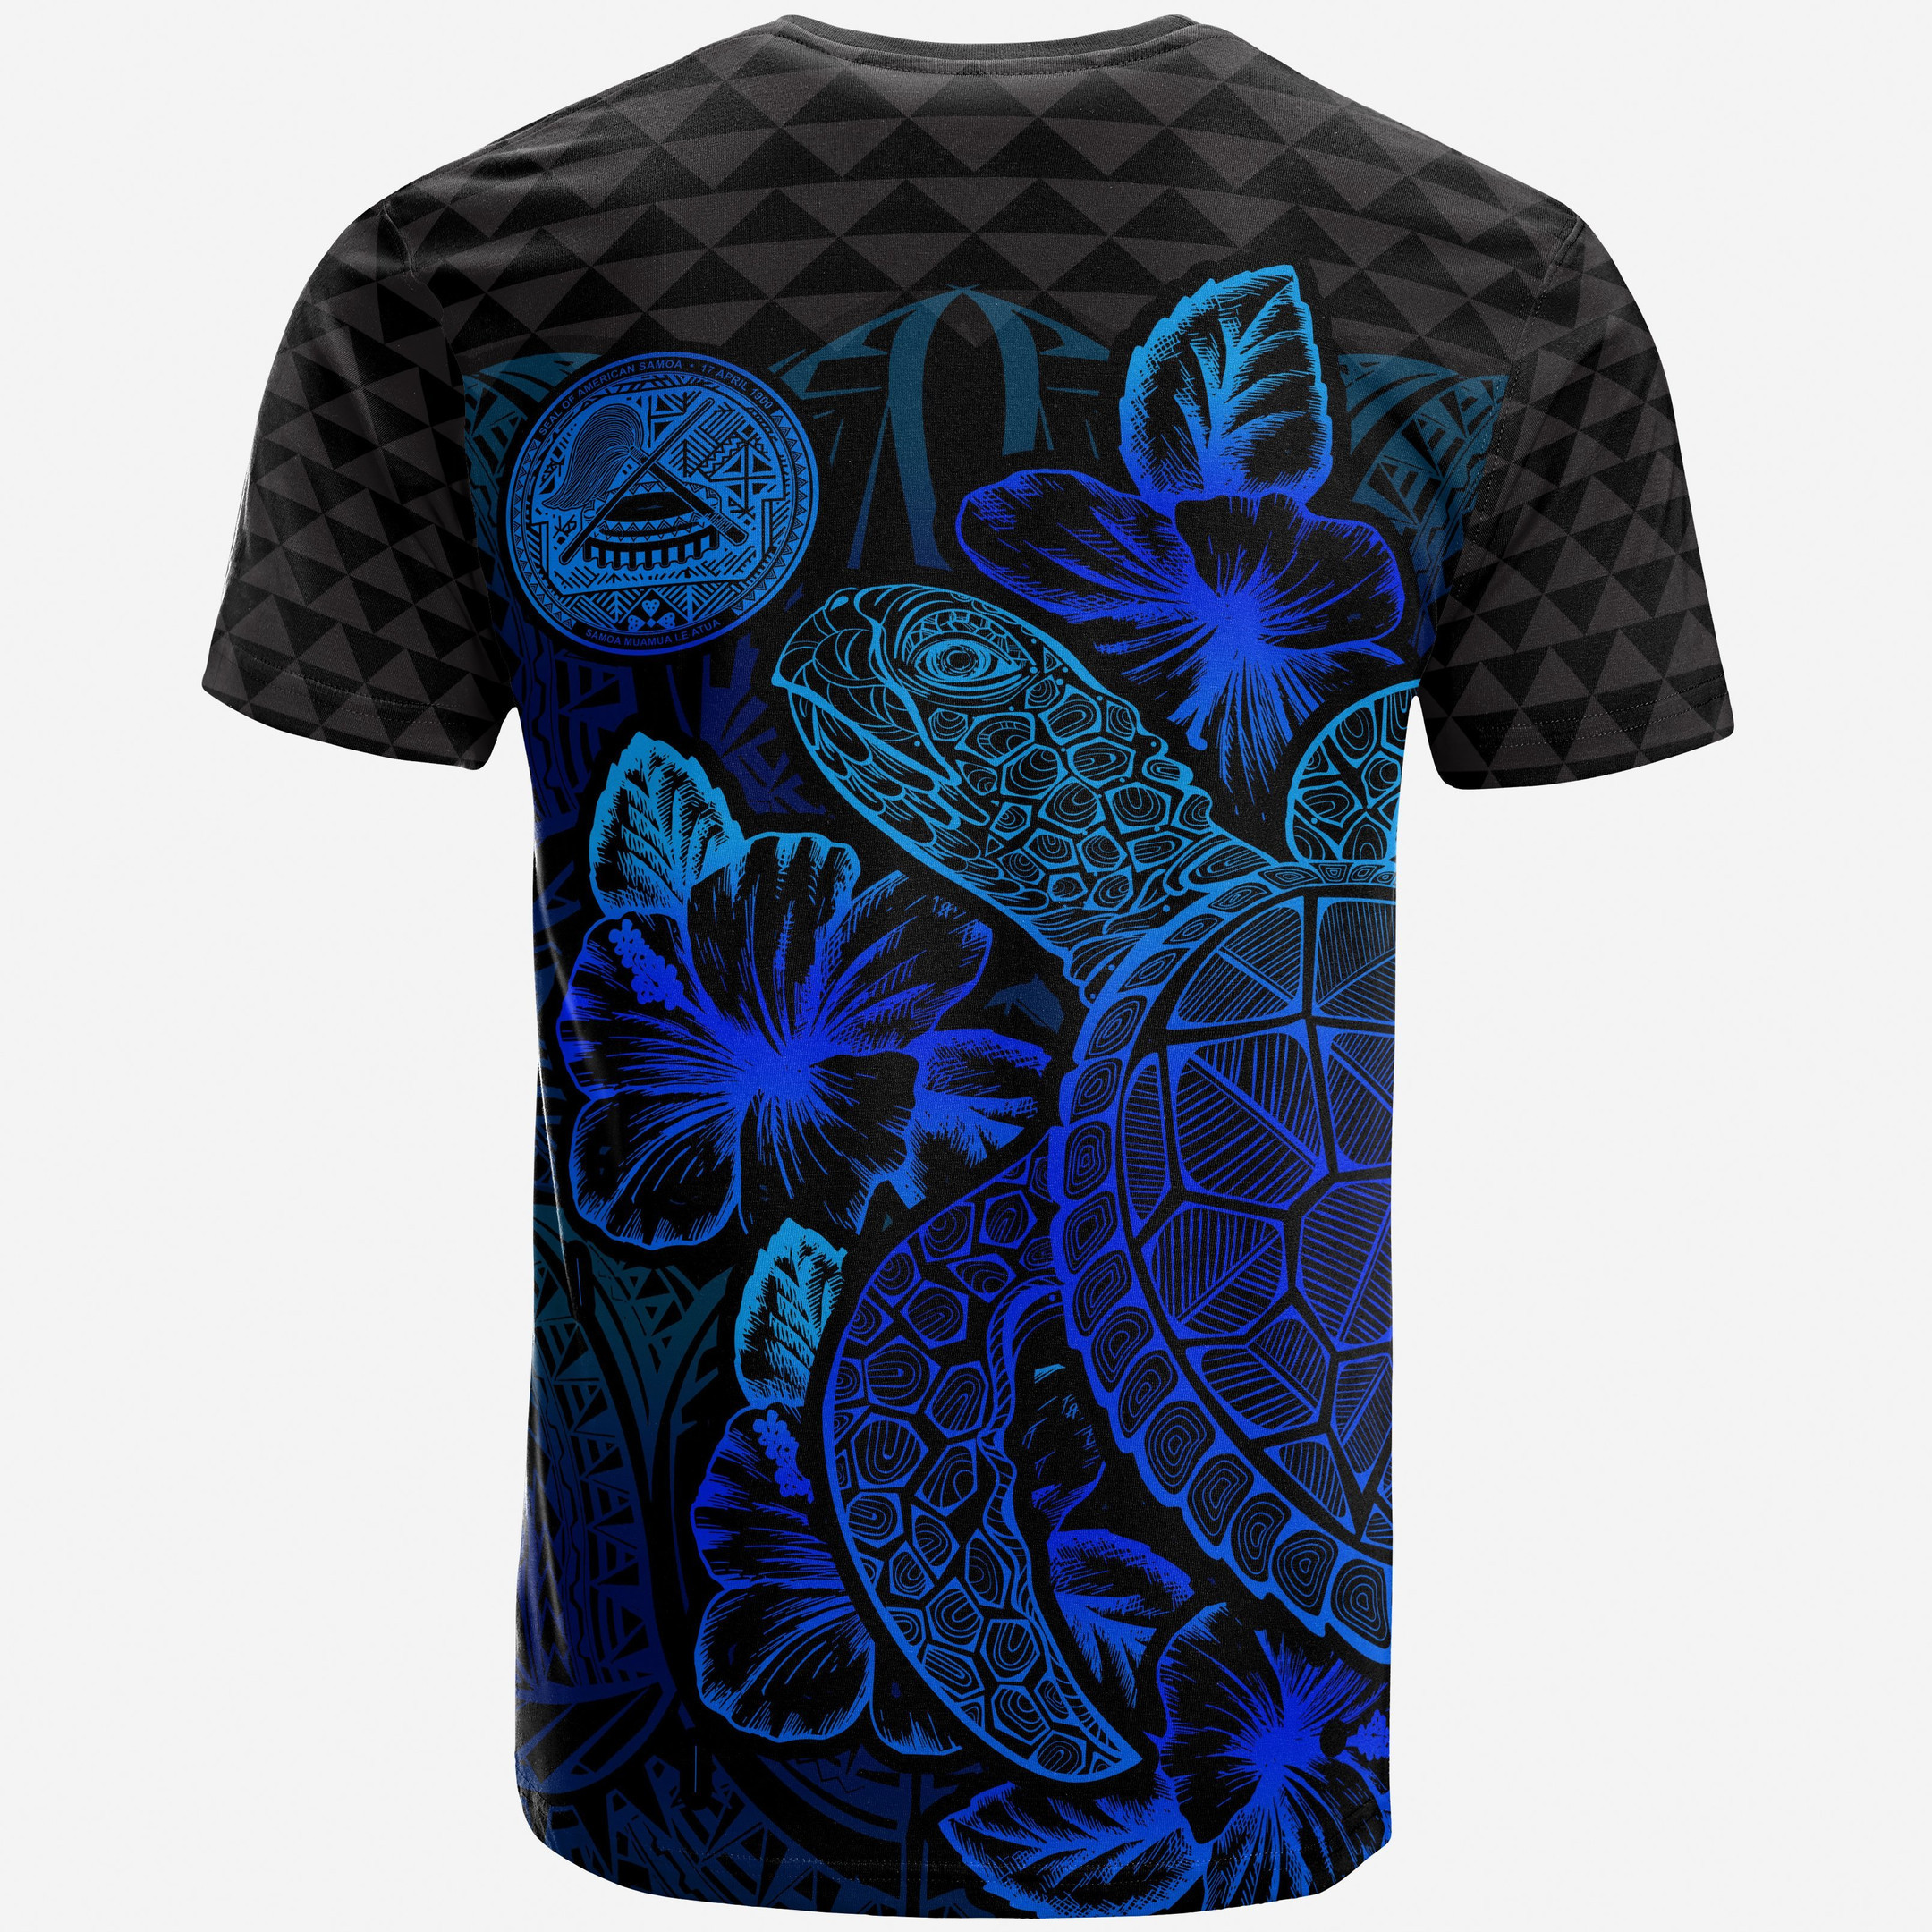 American Samoa Polynesian T-Shirt - Turtle Hibiscus Blue - BN39